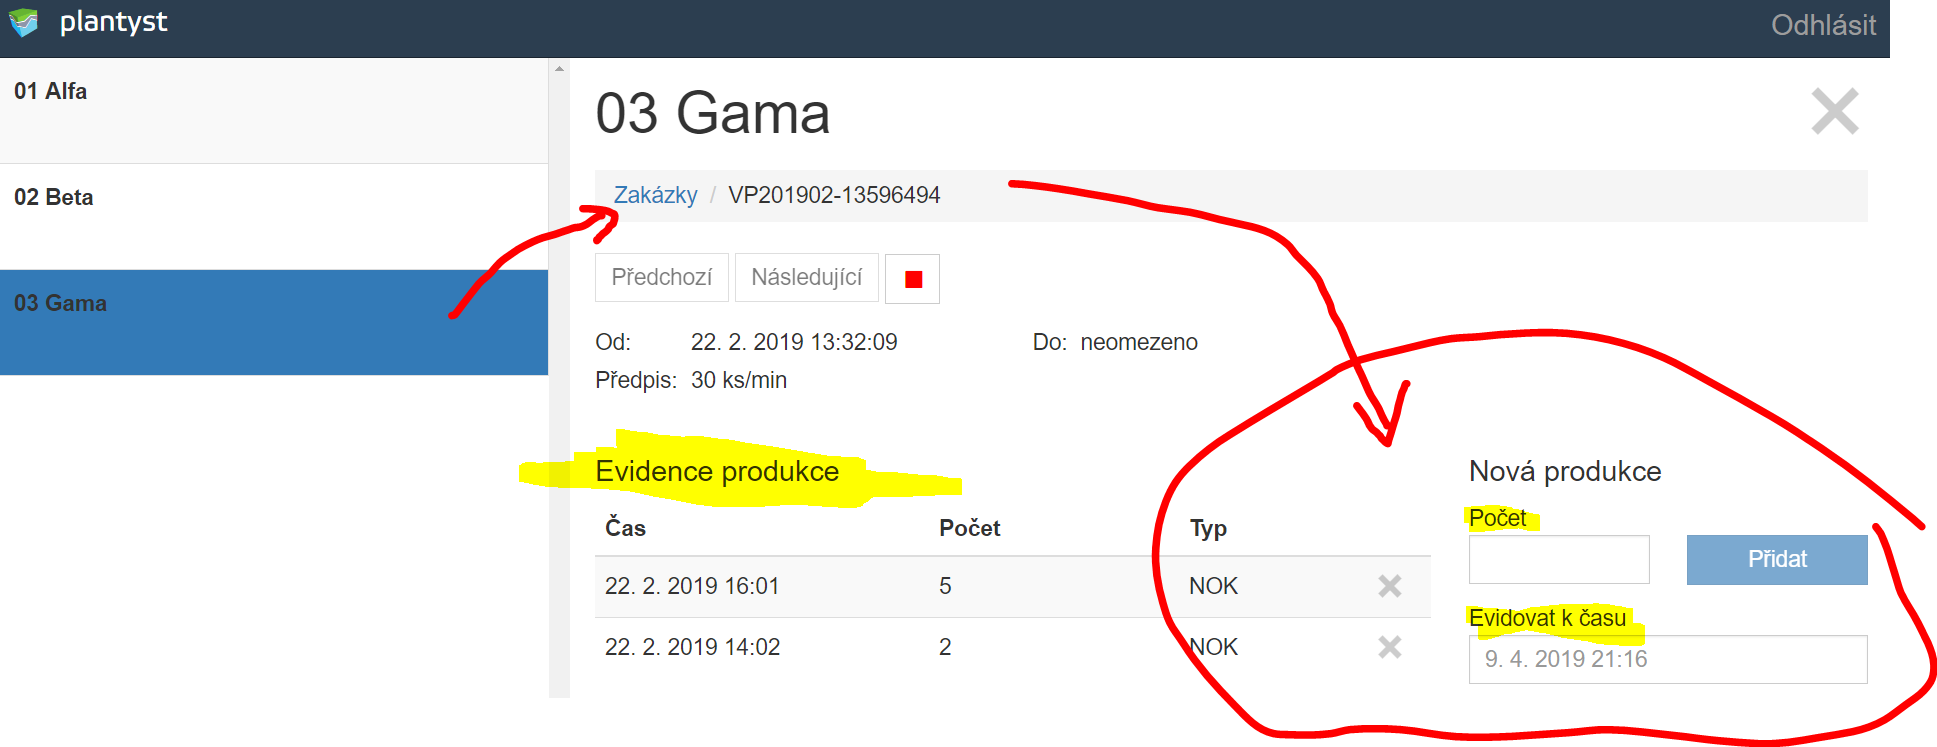 NOK_evidence_produkce.PNG